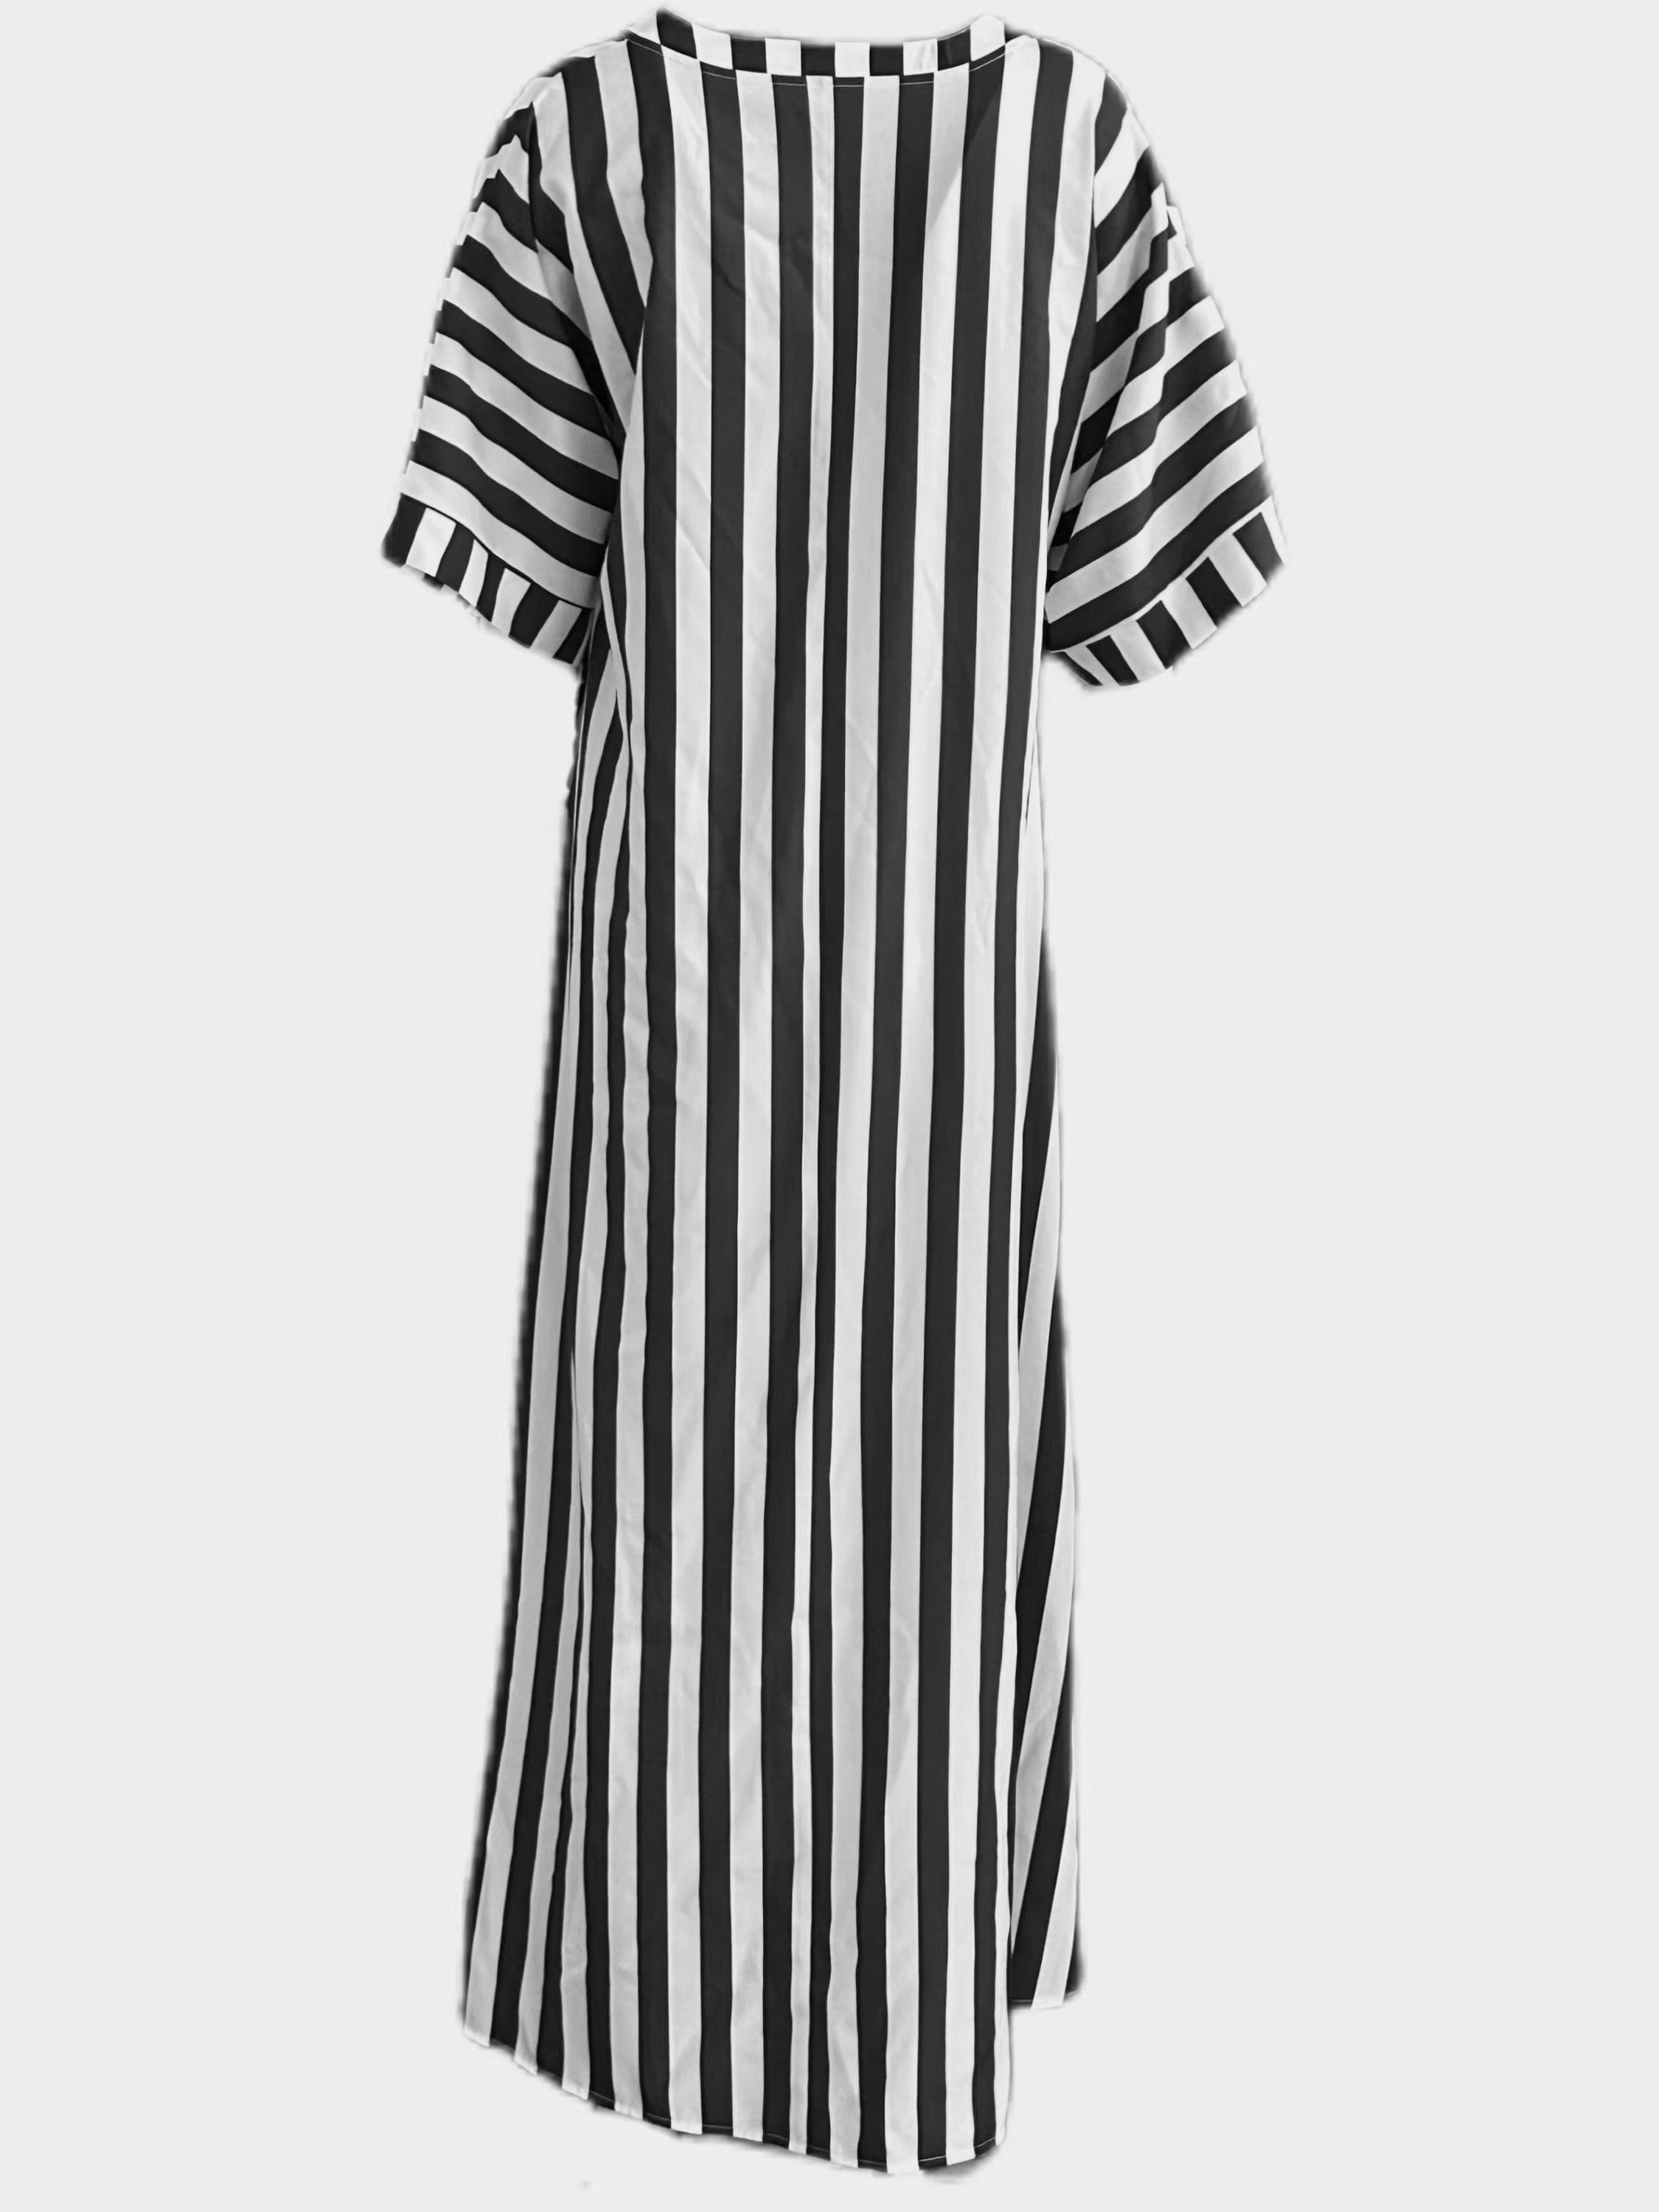 Wholesale Plus Maxi Dresses Stripe Dress Fashionable Casual Short Sleeve O  Neck Long Dress In L 5XL Sizes From Echmogen, $24.4